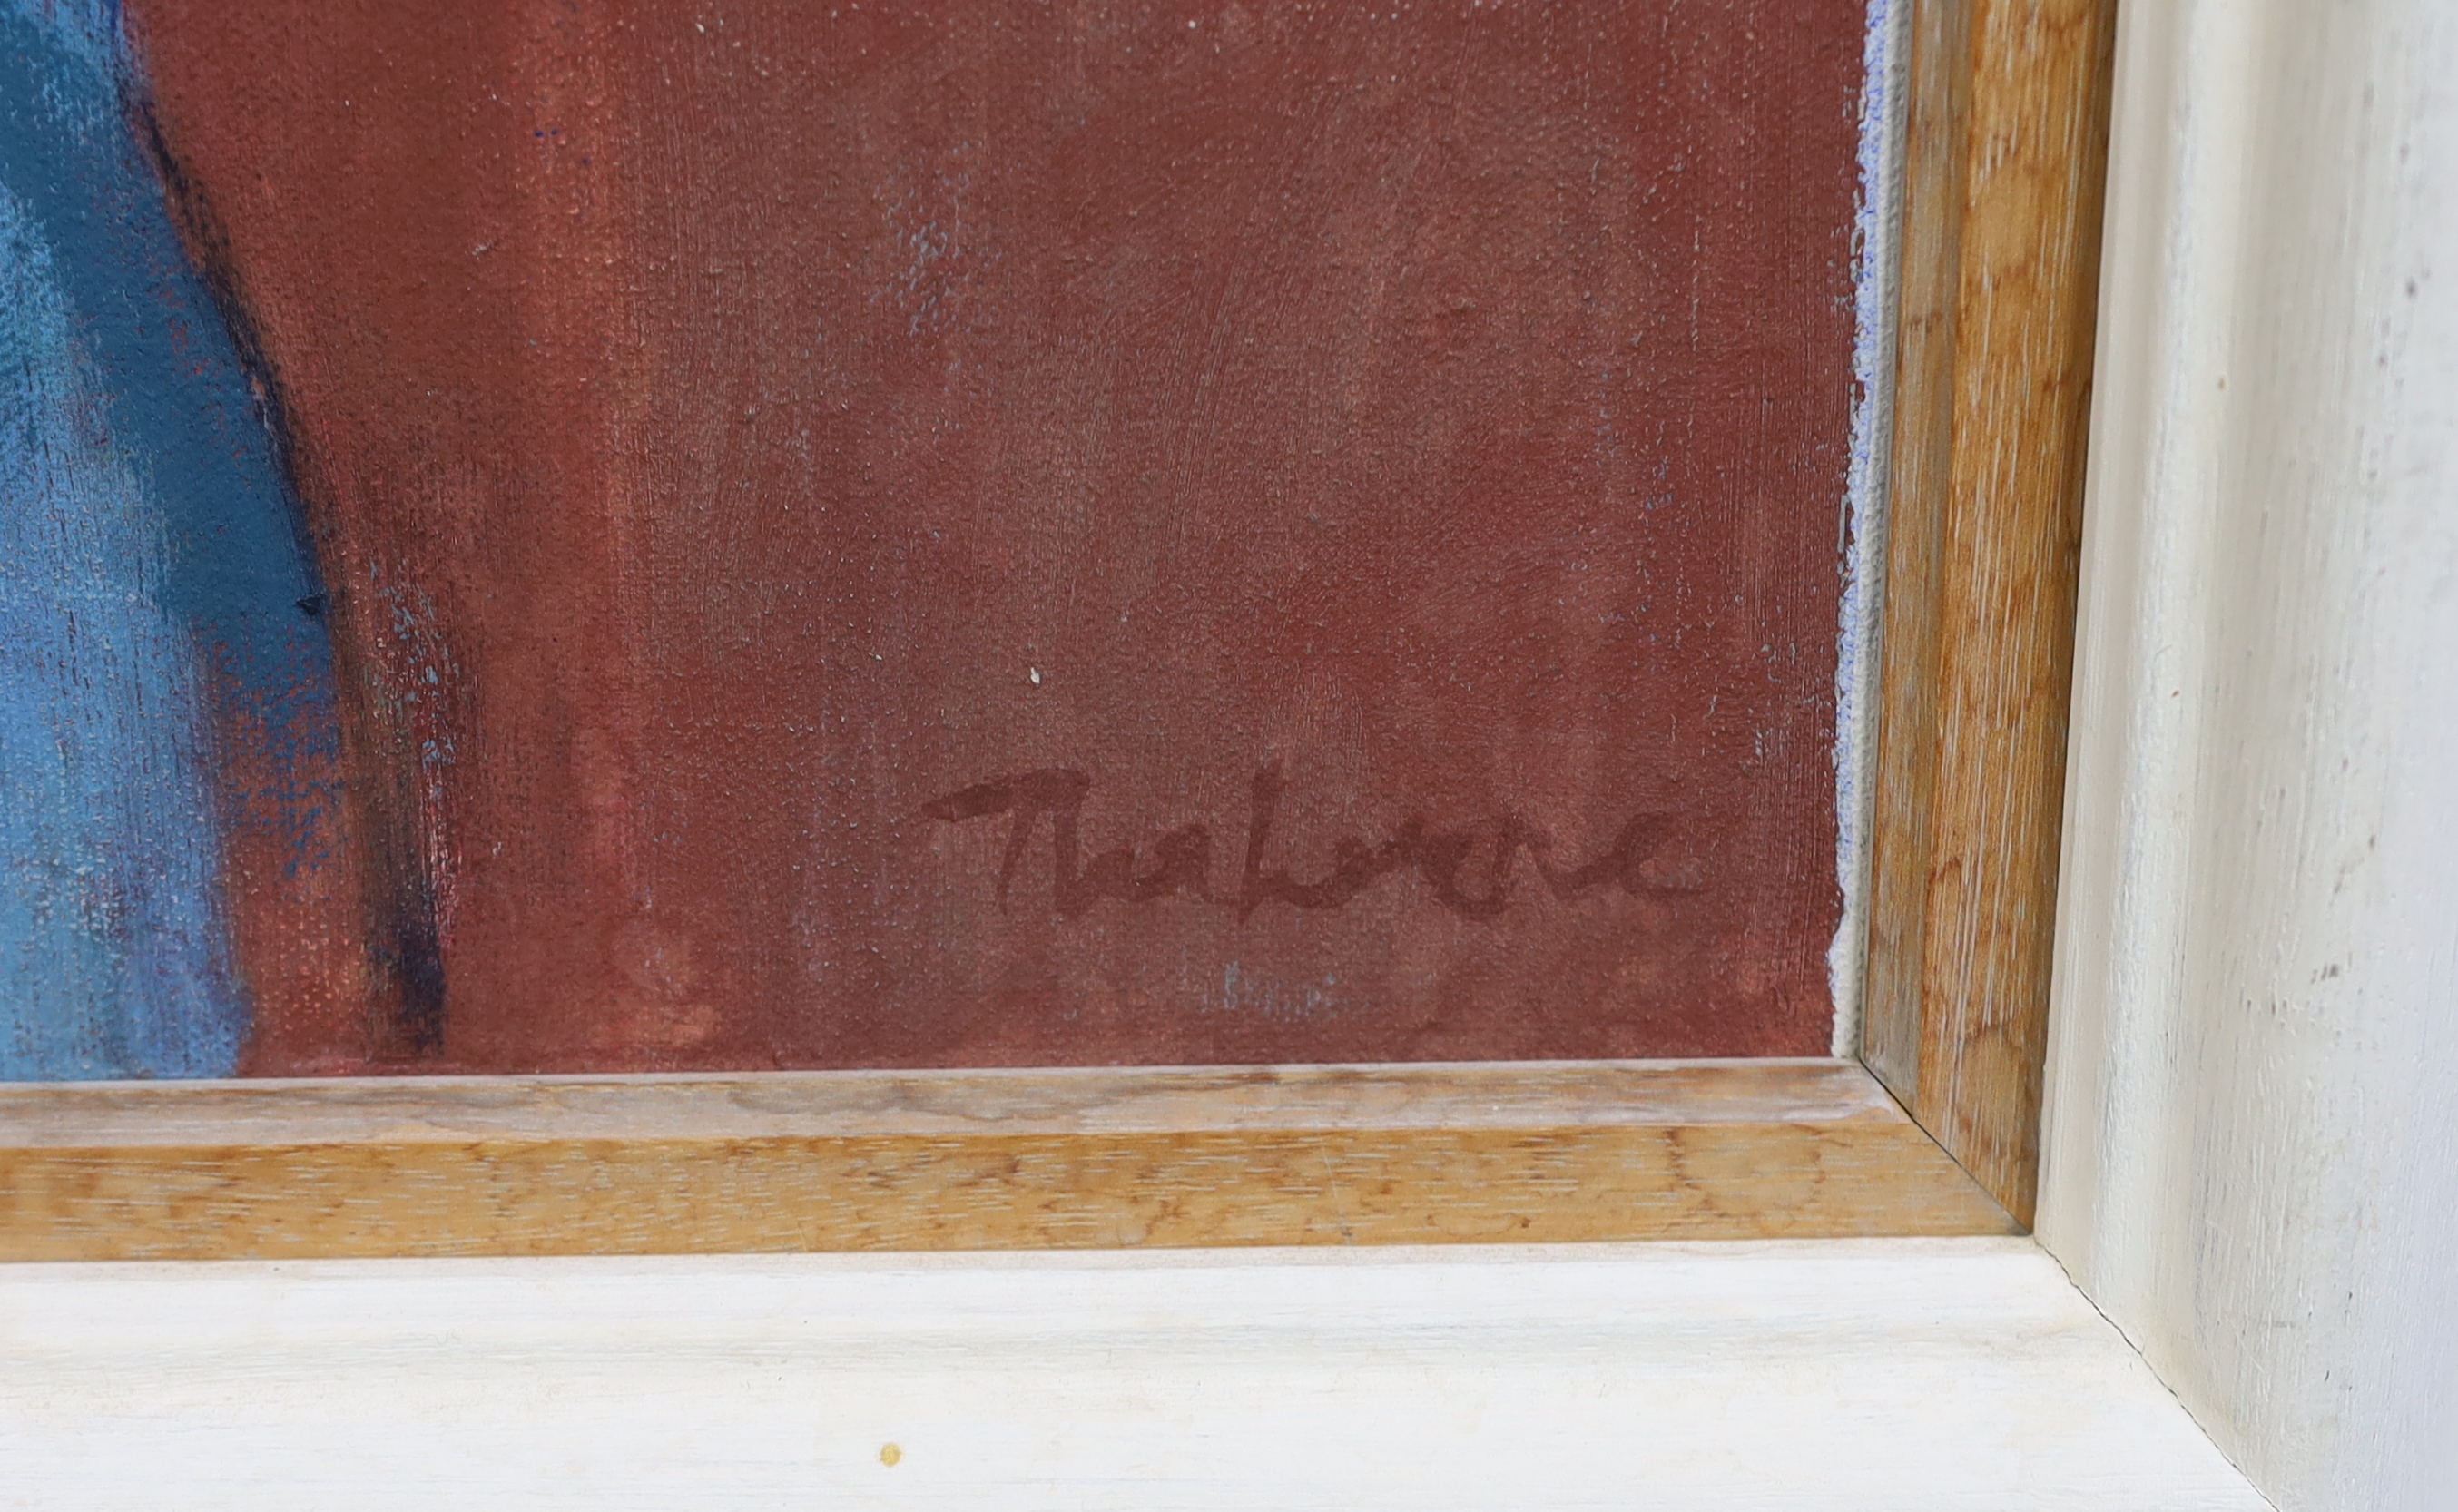 Margaret Traherne (English, 1919-2006), 'Cherry Blossom', oil on canvas, 63 x 75cm